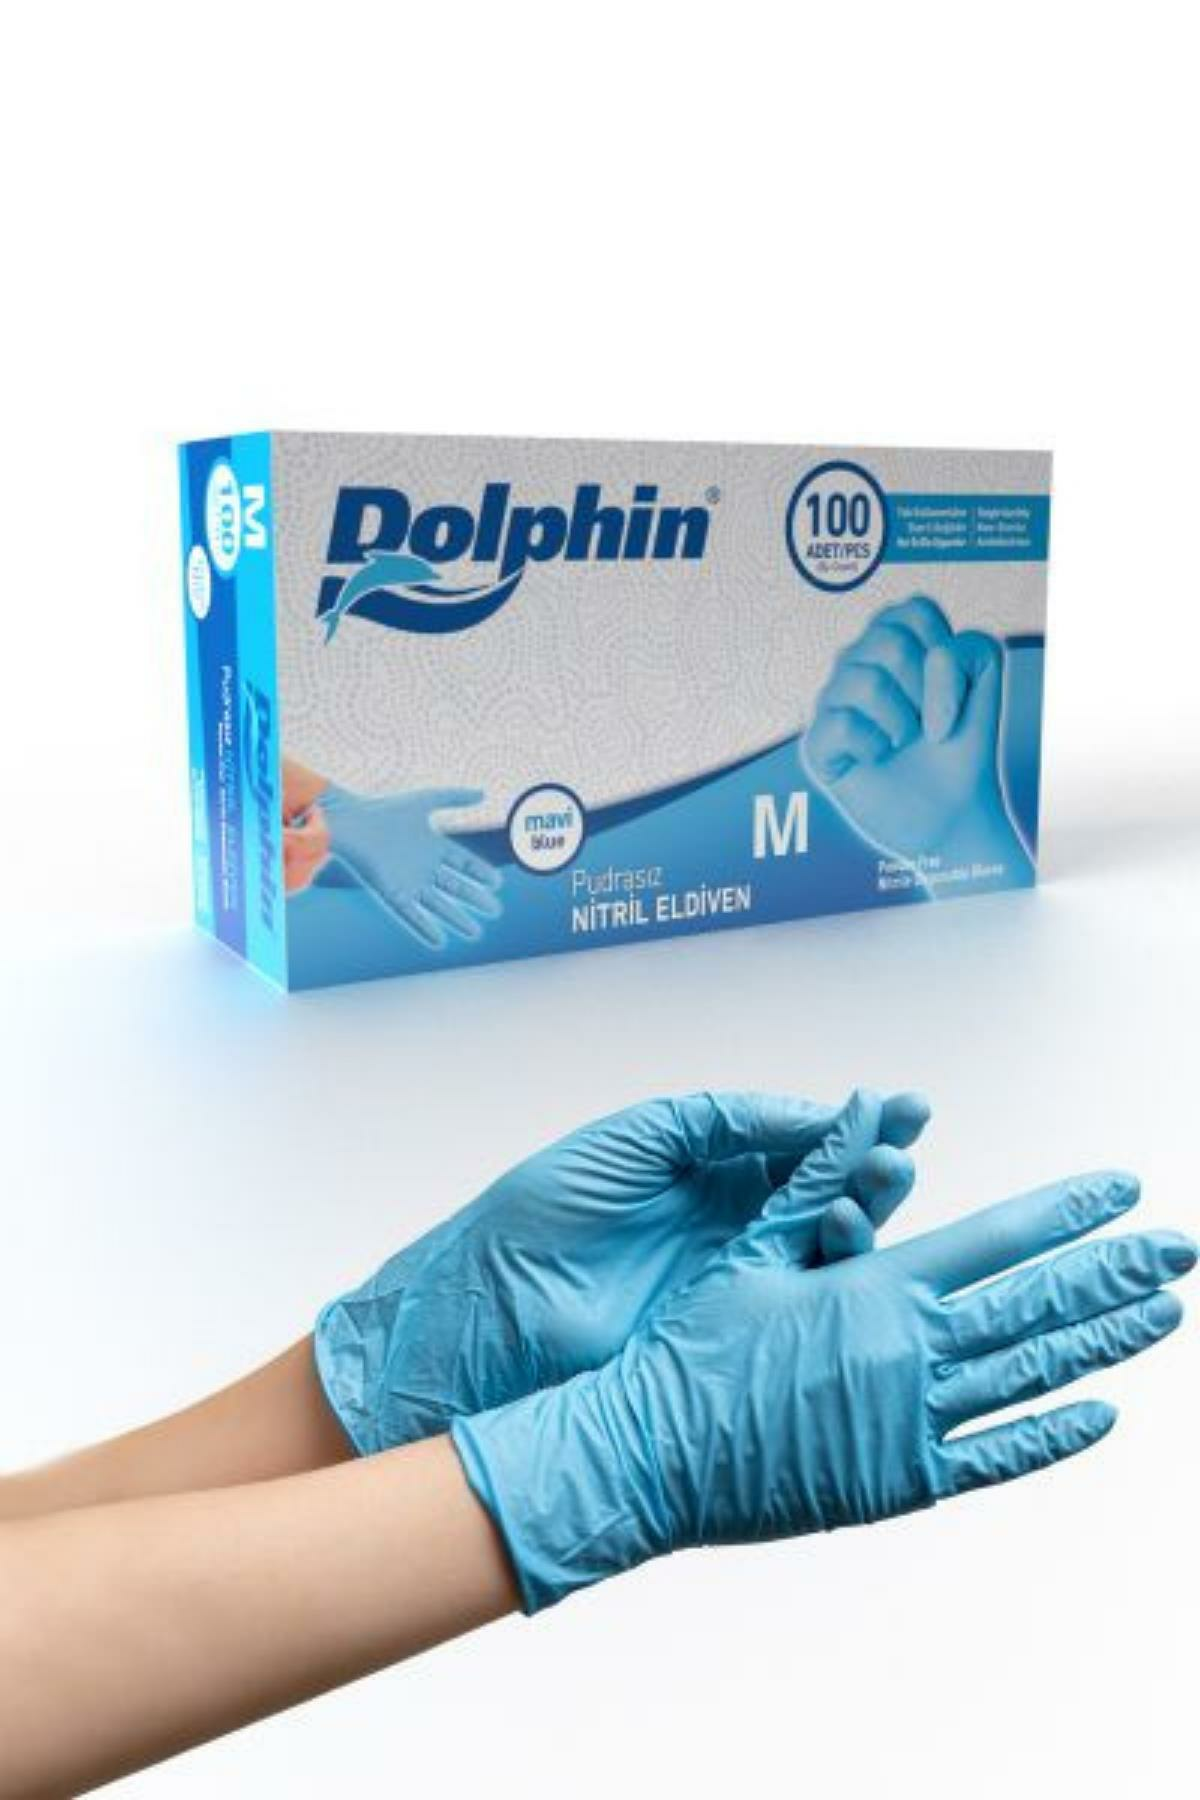 Dolphin Mavi Nitril Eldiven Pudrasız (M) 100'lü Paket